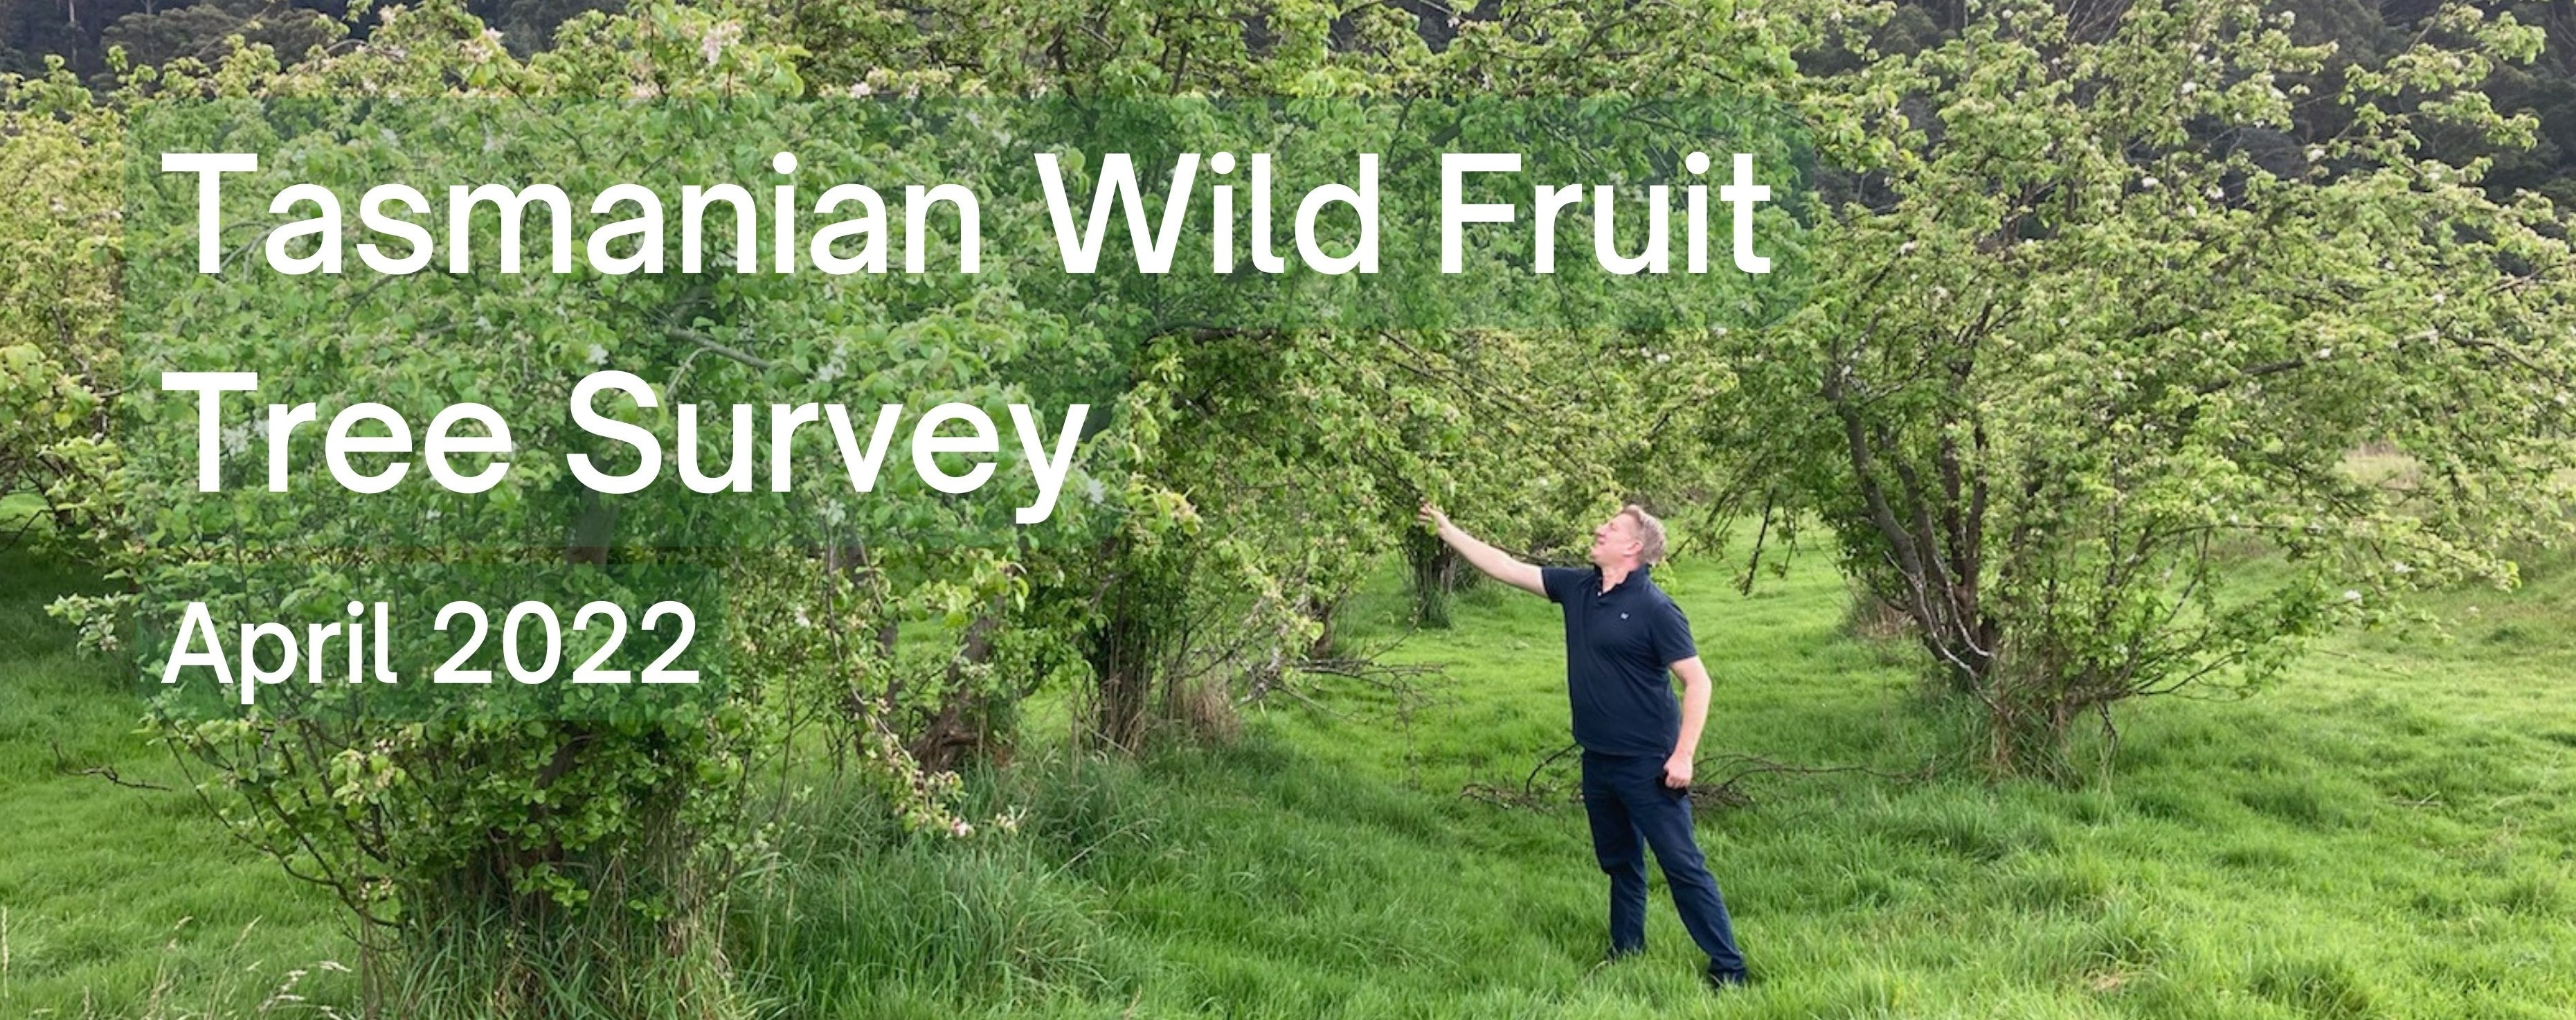 Tasmanian wild fruit tree survey